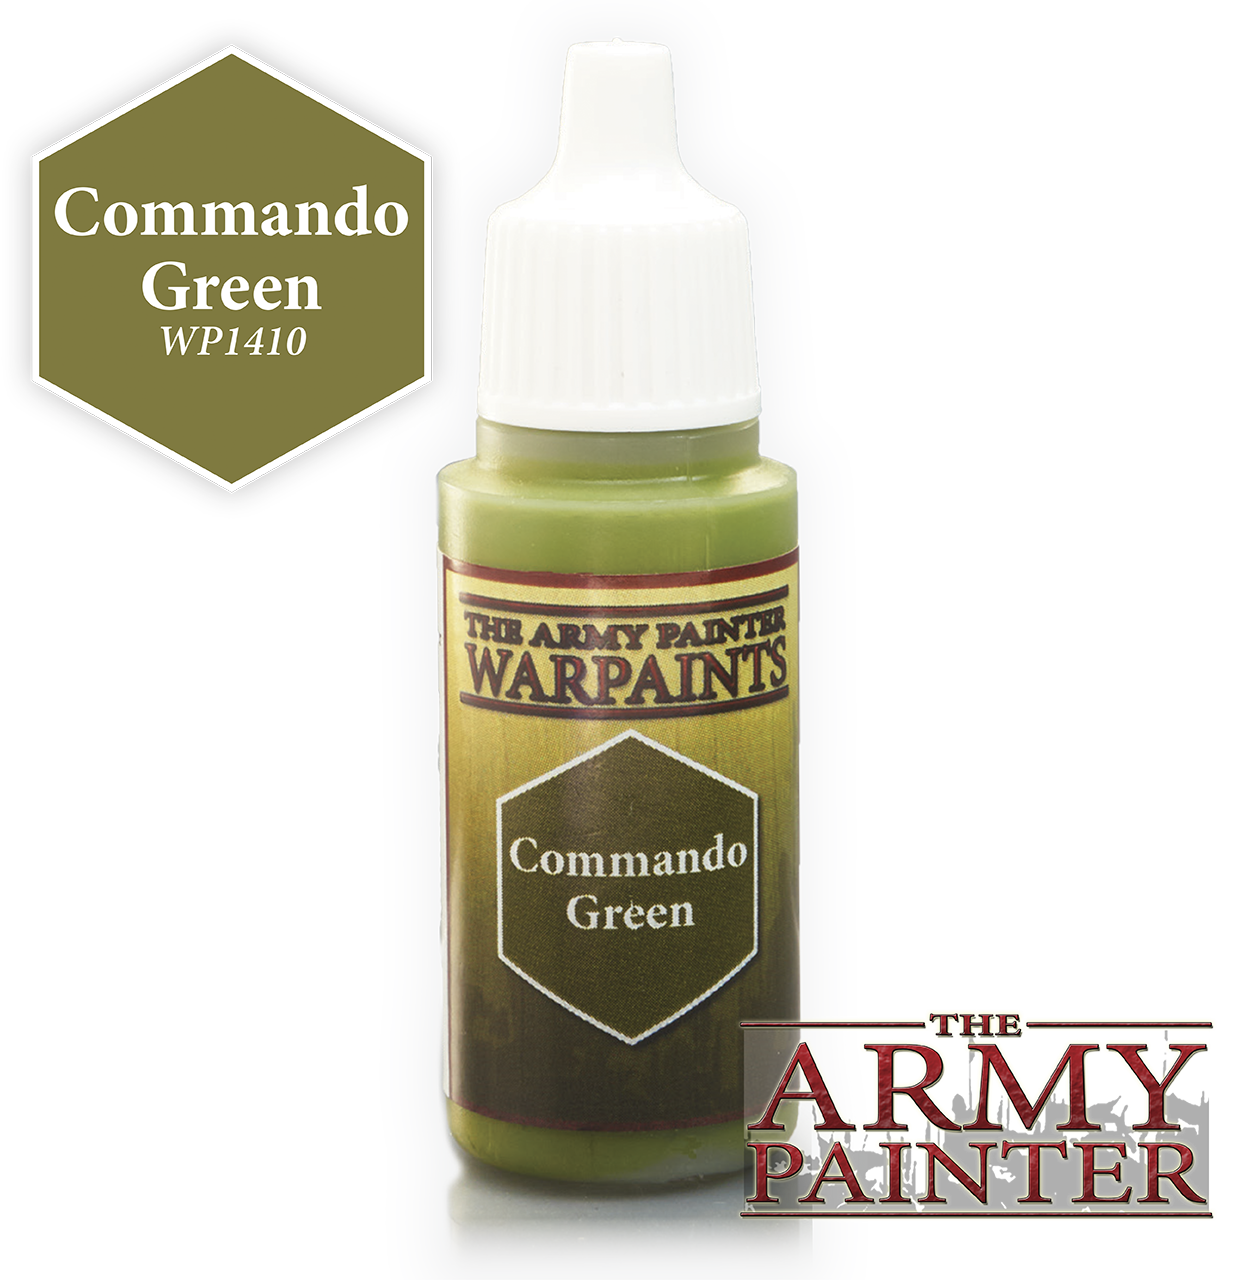 Commando Green - Army Painter Warpaints